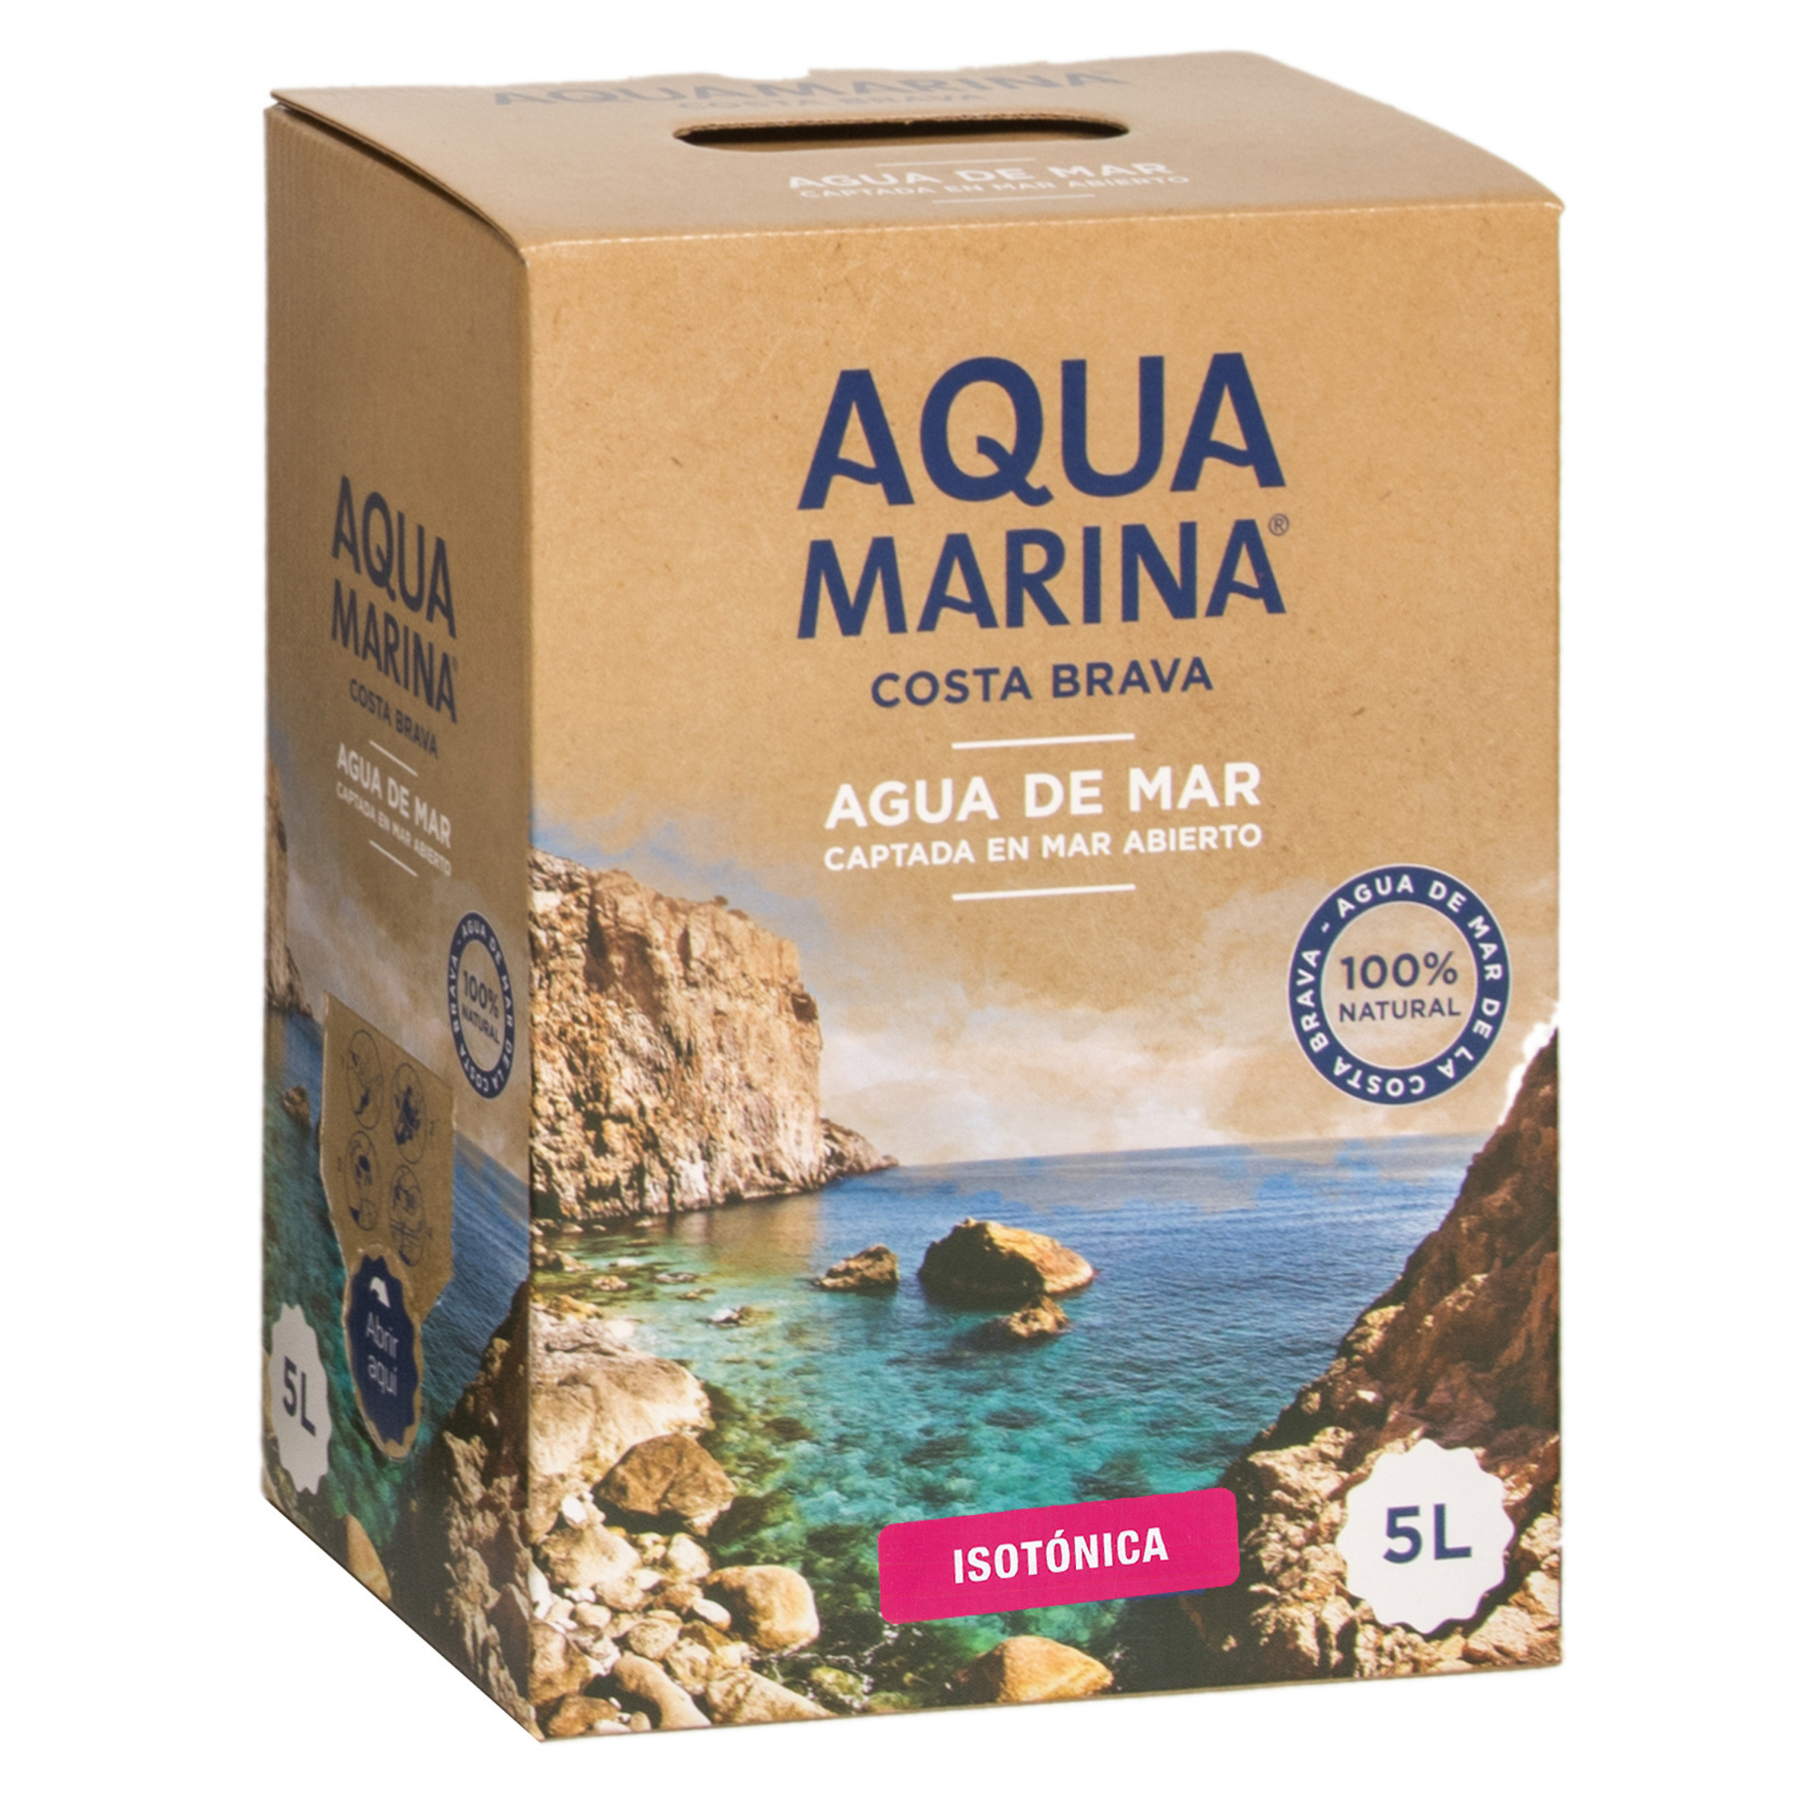 AQUAMARINA Costa Brava. Agua marina Isotónica 5 Litros Bag In Box. Microfiltrada, sin aditivos. Aporta 75 minerales y oligoelementos.